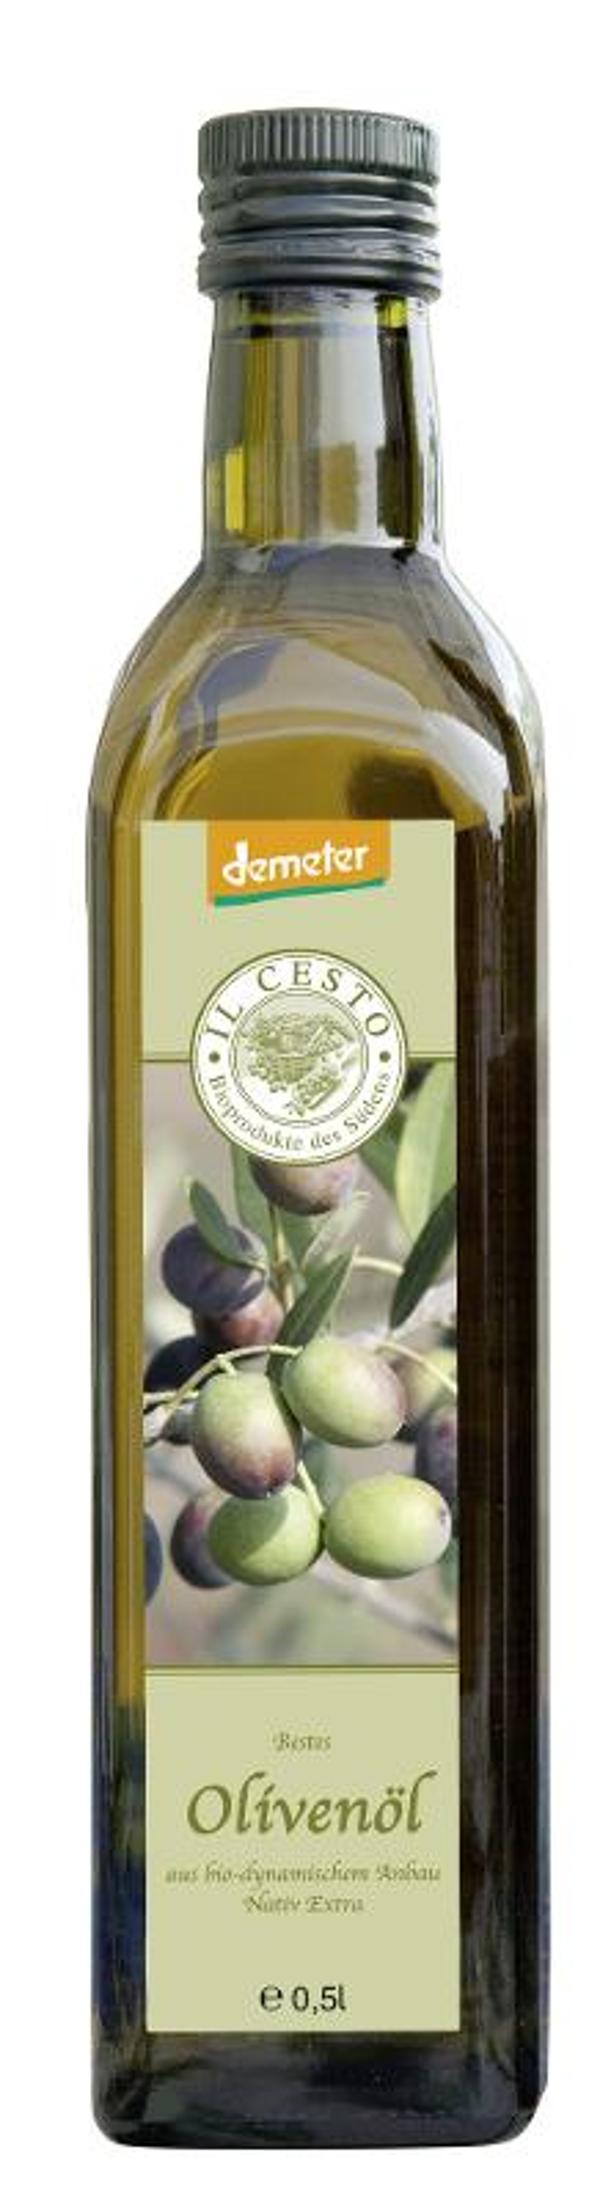 Produktfoto zu Il Cesto Olivenöl nativ extra demeter - 0,5l